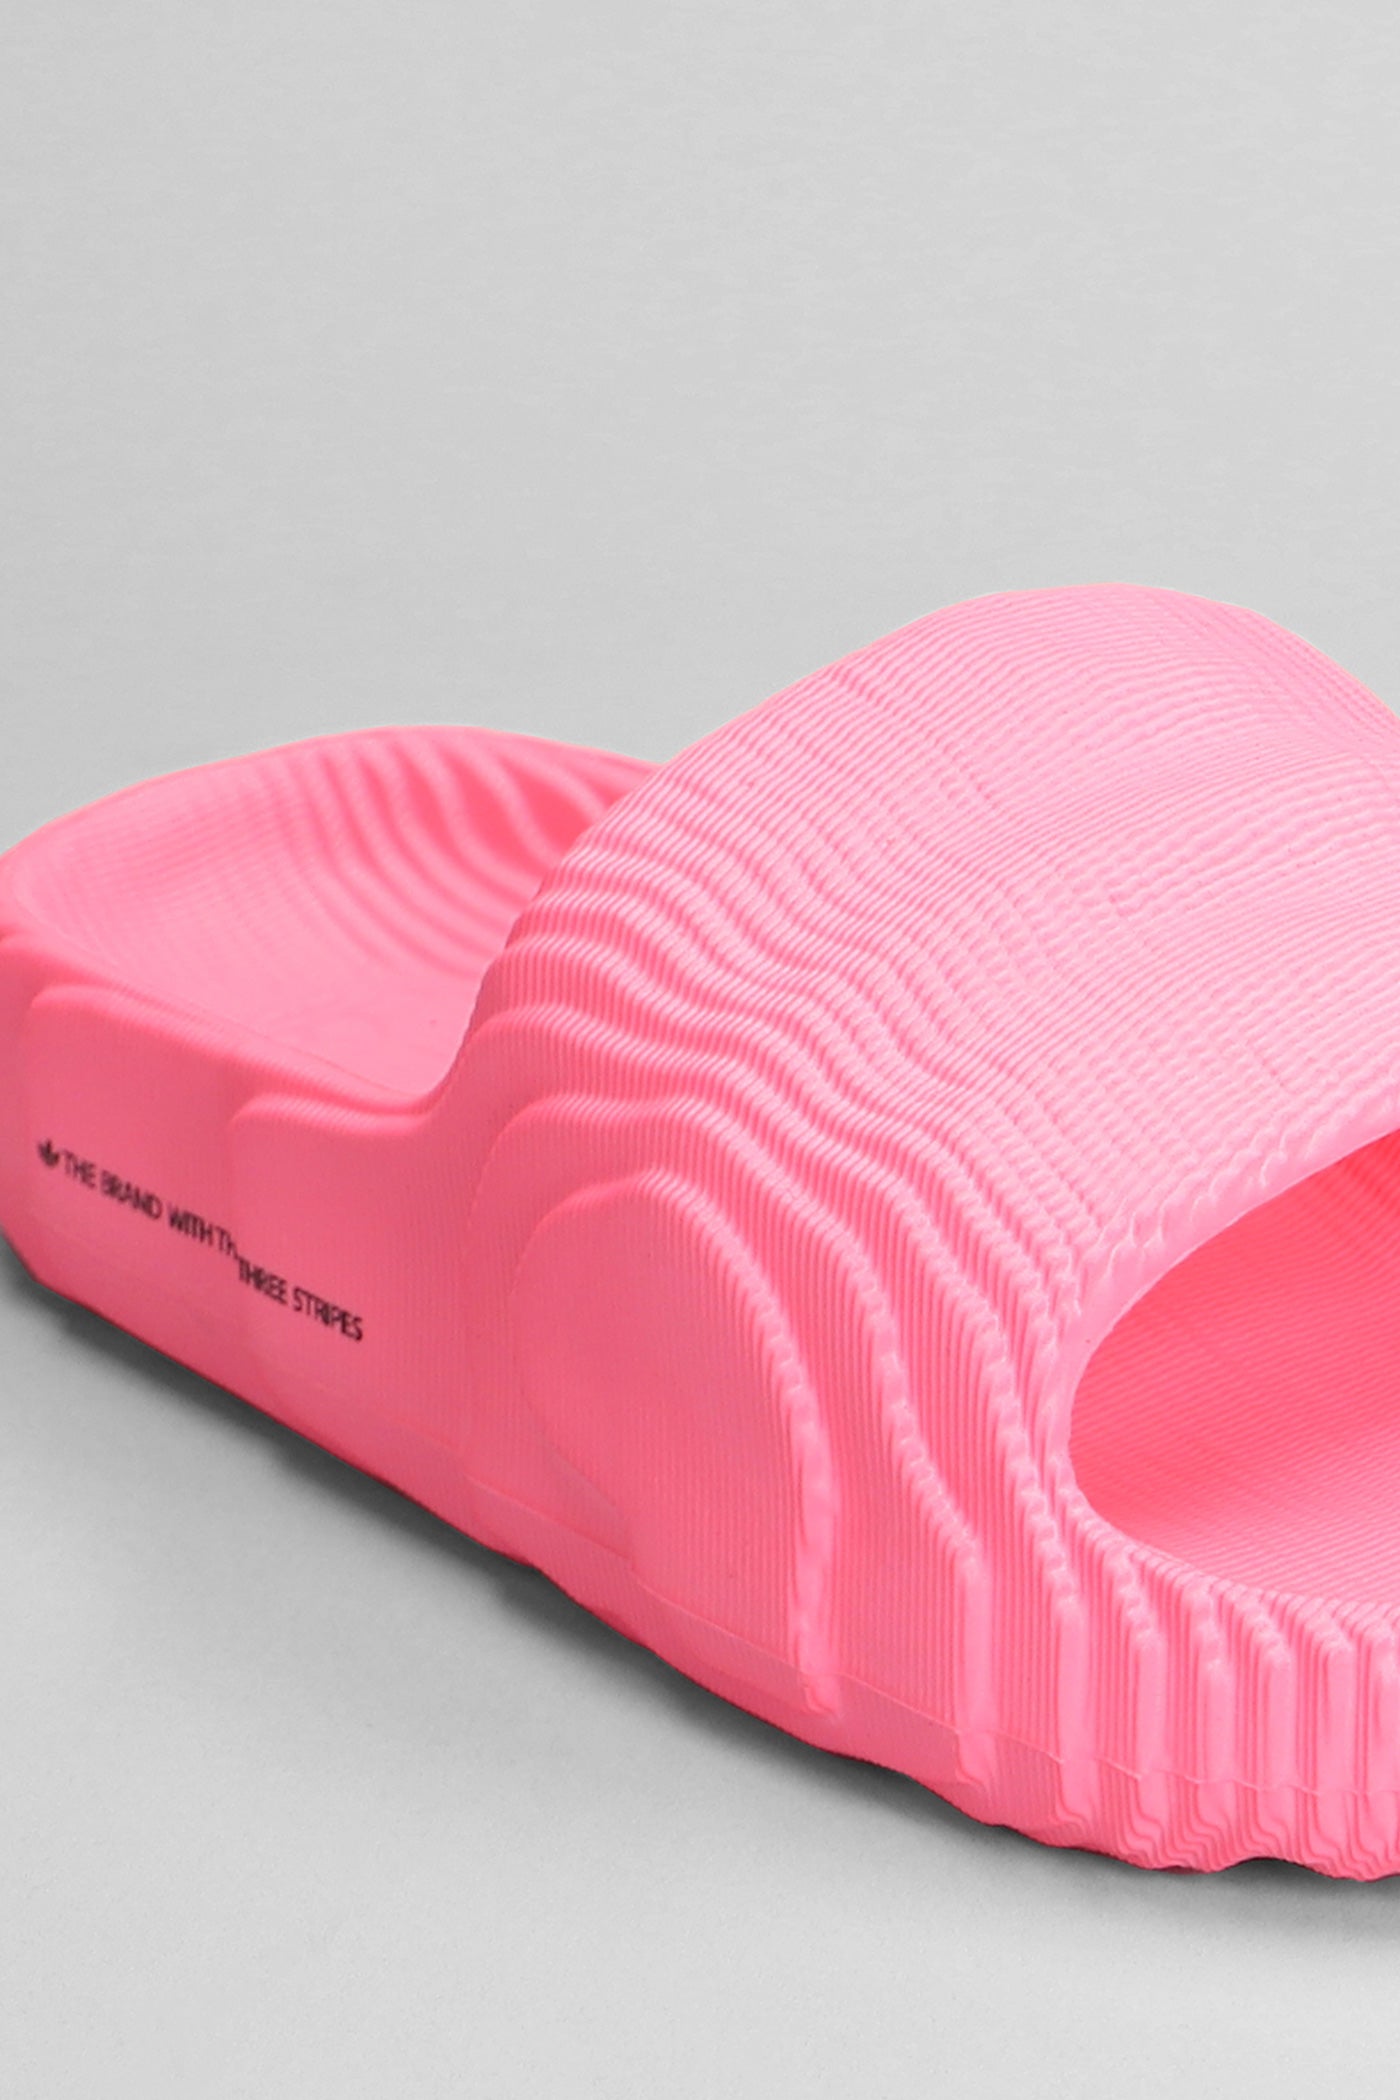 Adilette 22 Flats in rose-pink rubber/plasic